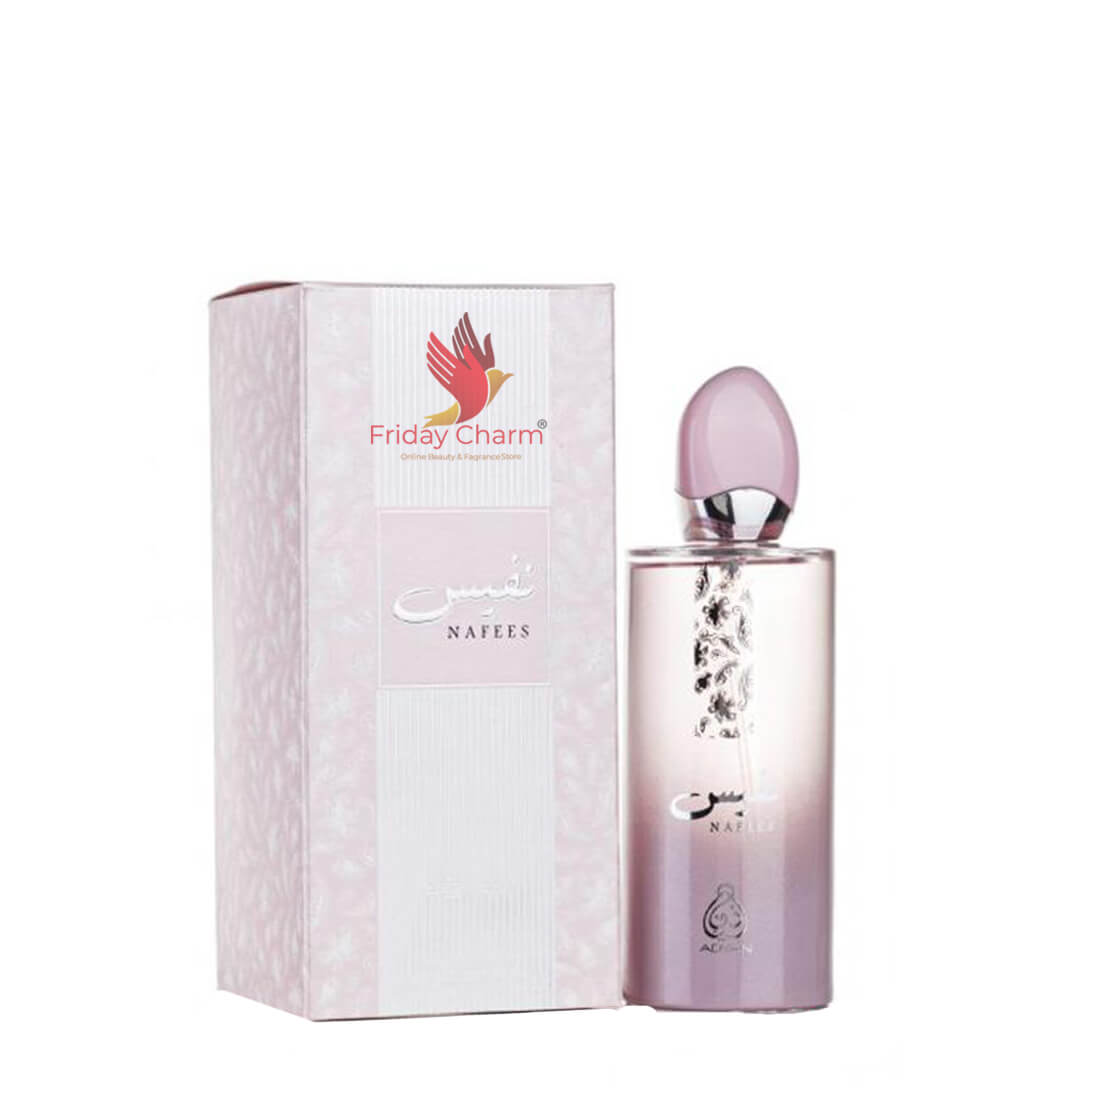 Adyan Nafees Perfume Spray - 100ml